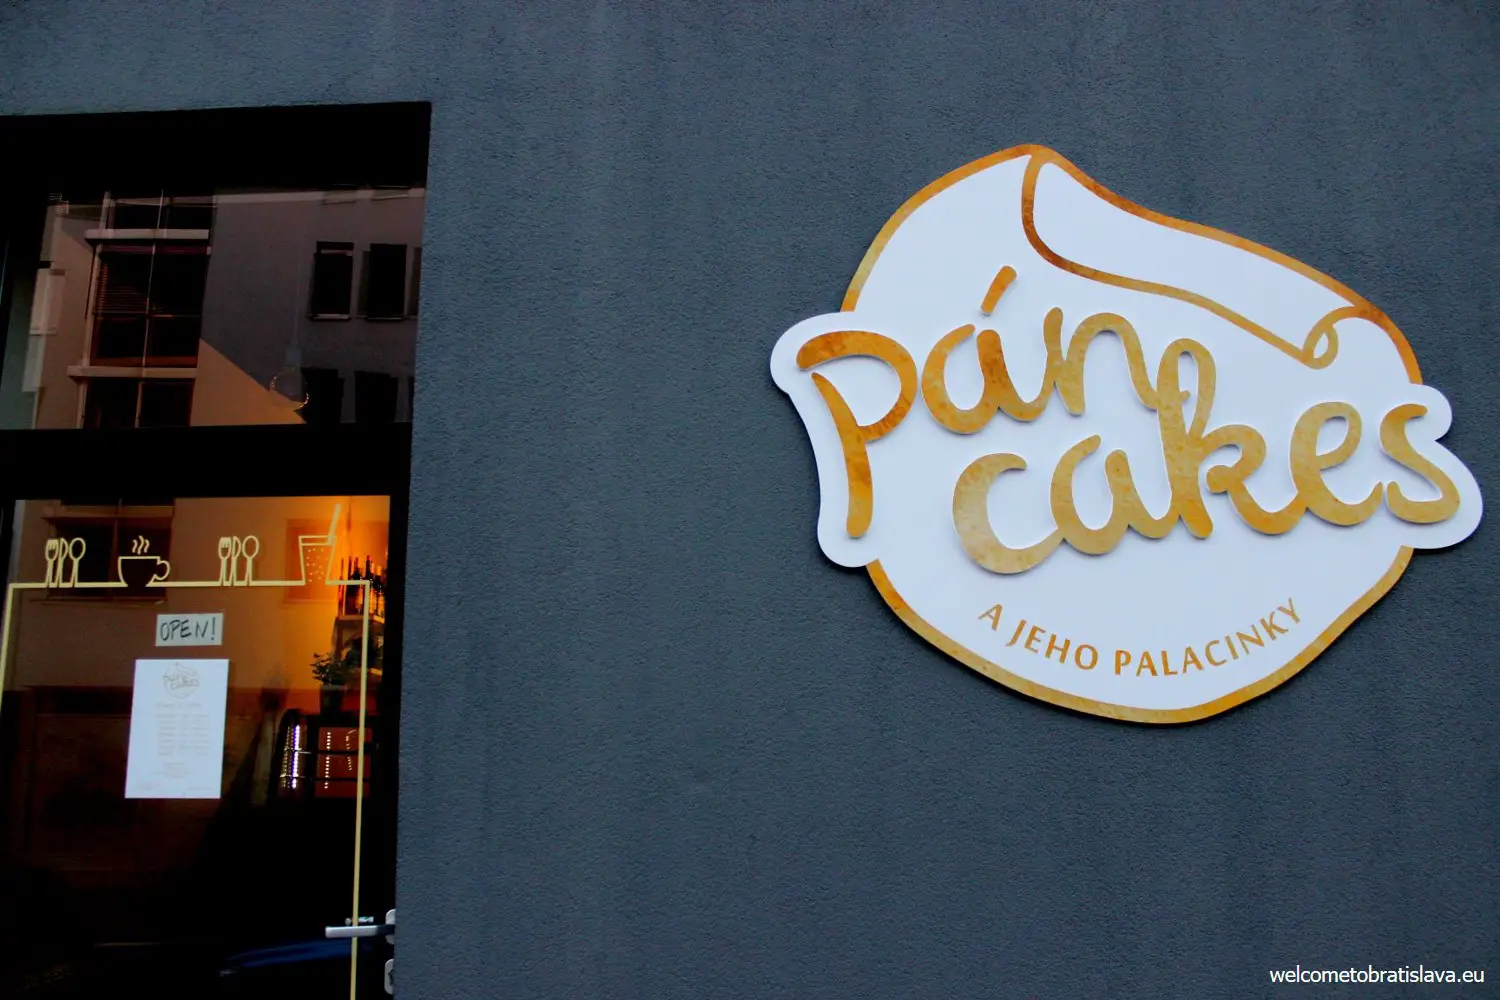 Pan Cakes